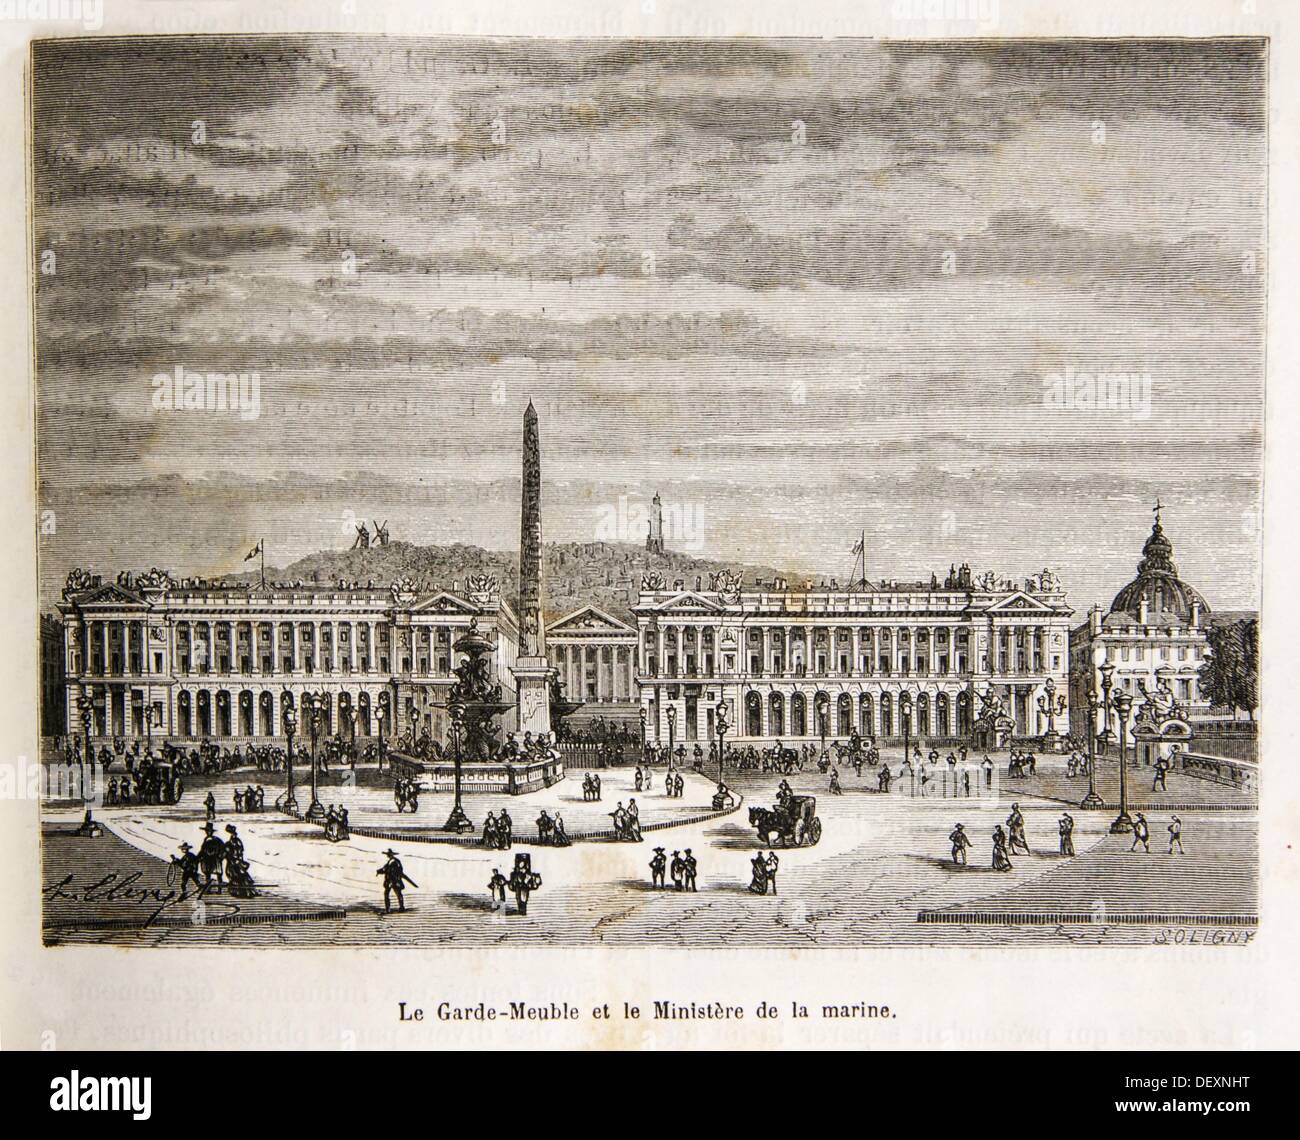 Hôtel du Garde-Meuble and the naval ministry (18th century), Paris, France  Stock Photo - Alamy